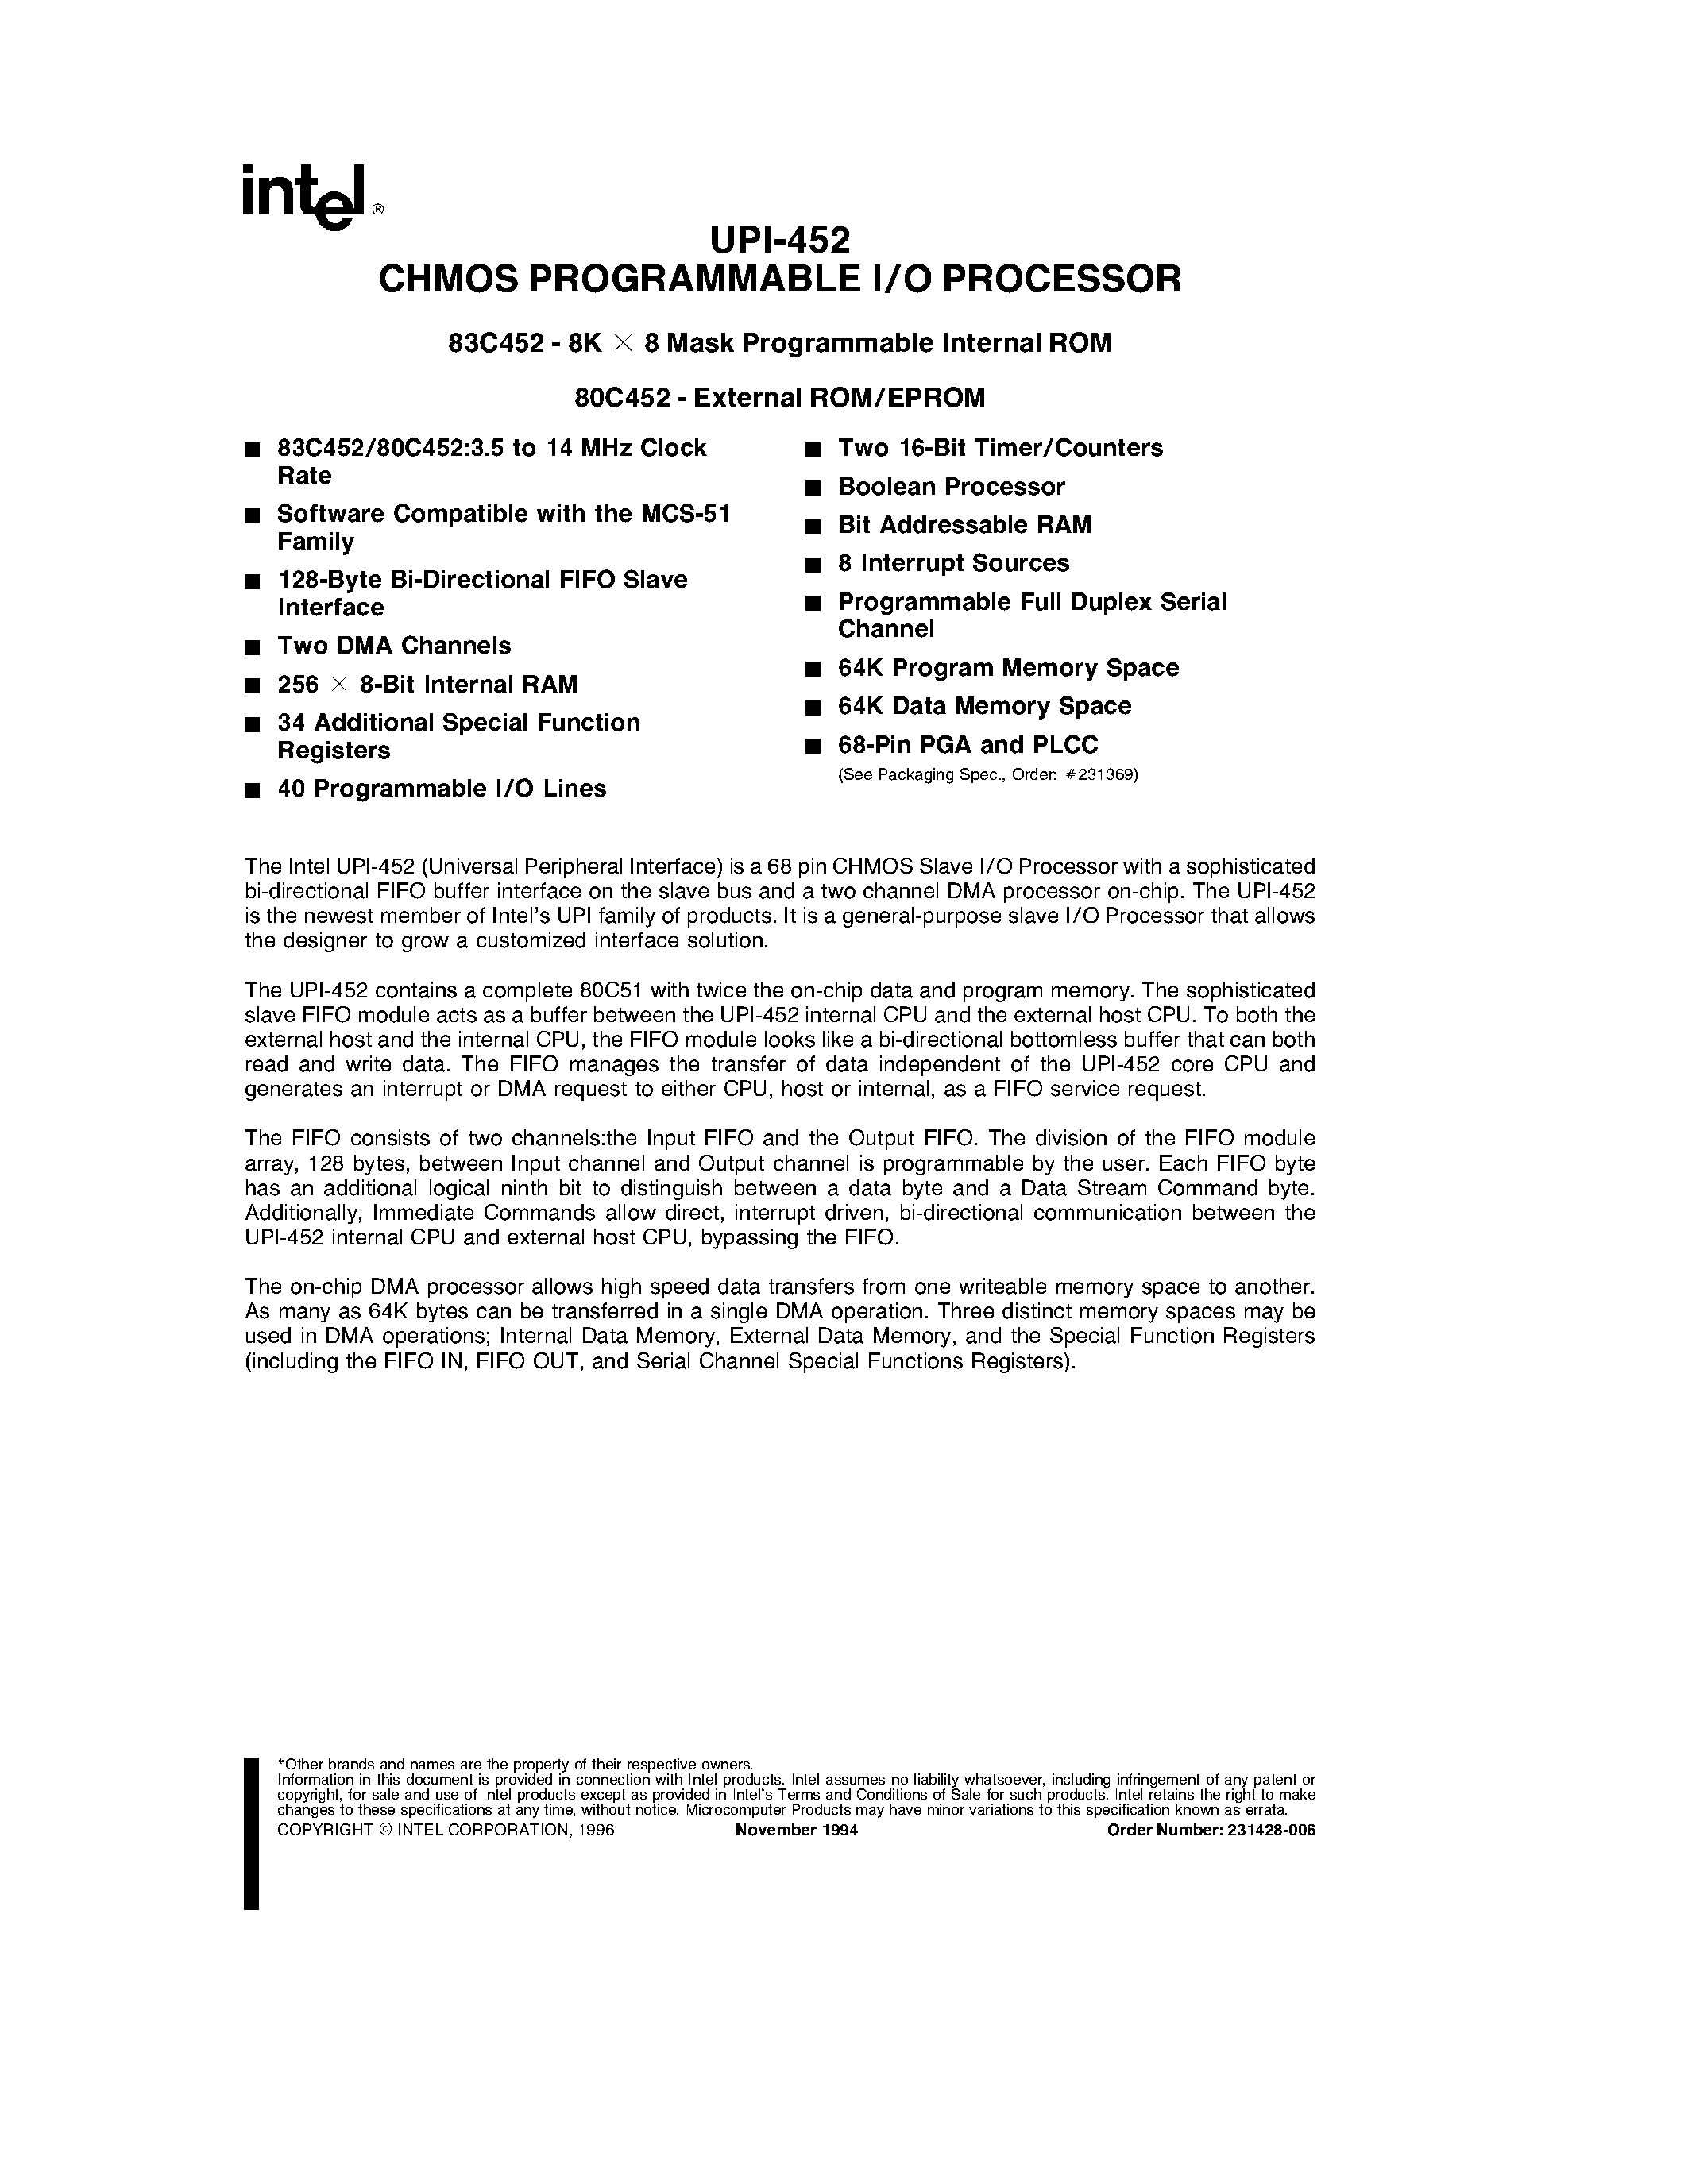 Даташит UPI-452 - CHMOS PROGRAMMABLE I/O PROCESSOR страница 1